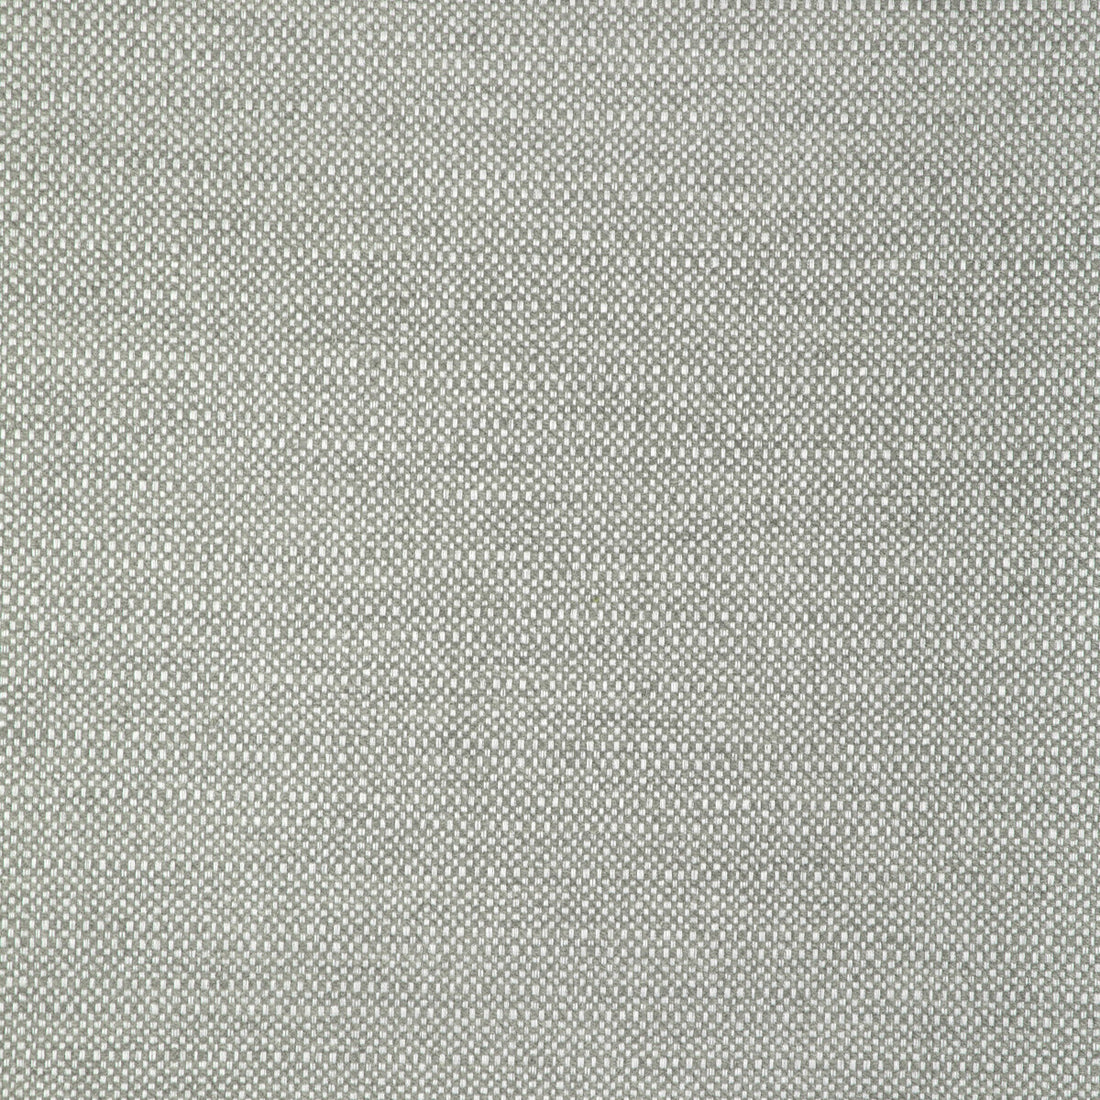 Kravet Design fabric in 36776-11 color - pattern 36776.11.0 - by Kravet Design in the Sea Island Indoor/Outdoor collection